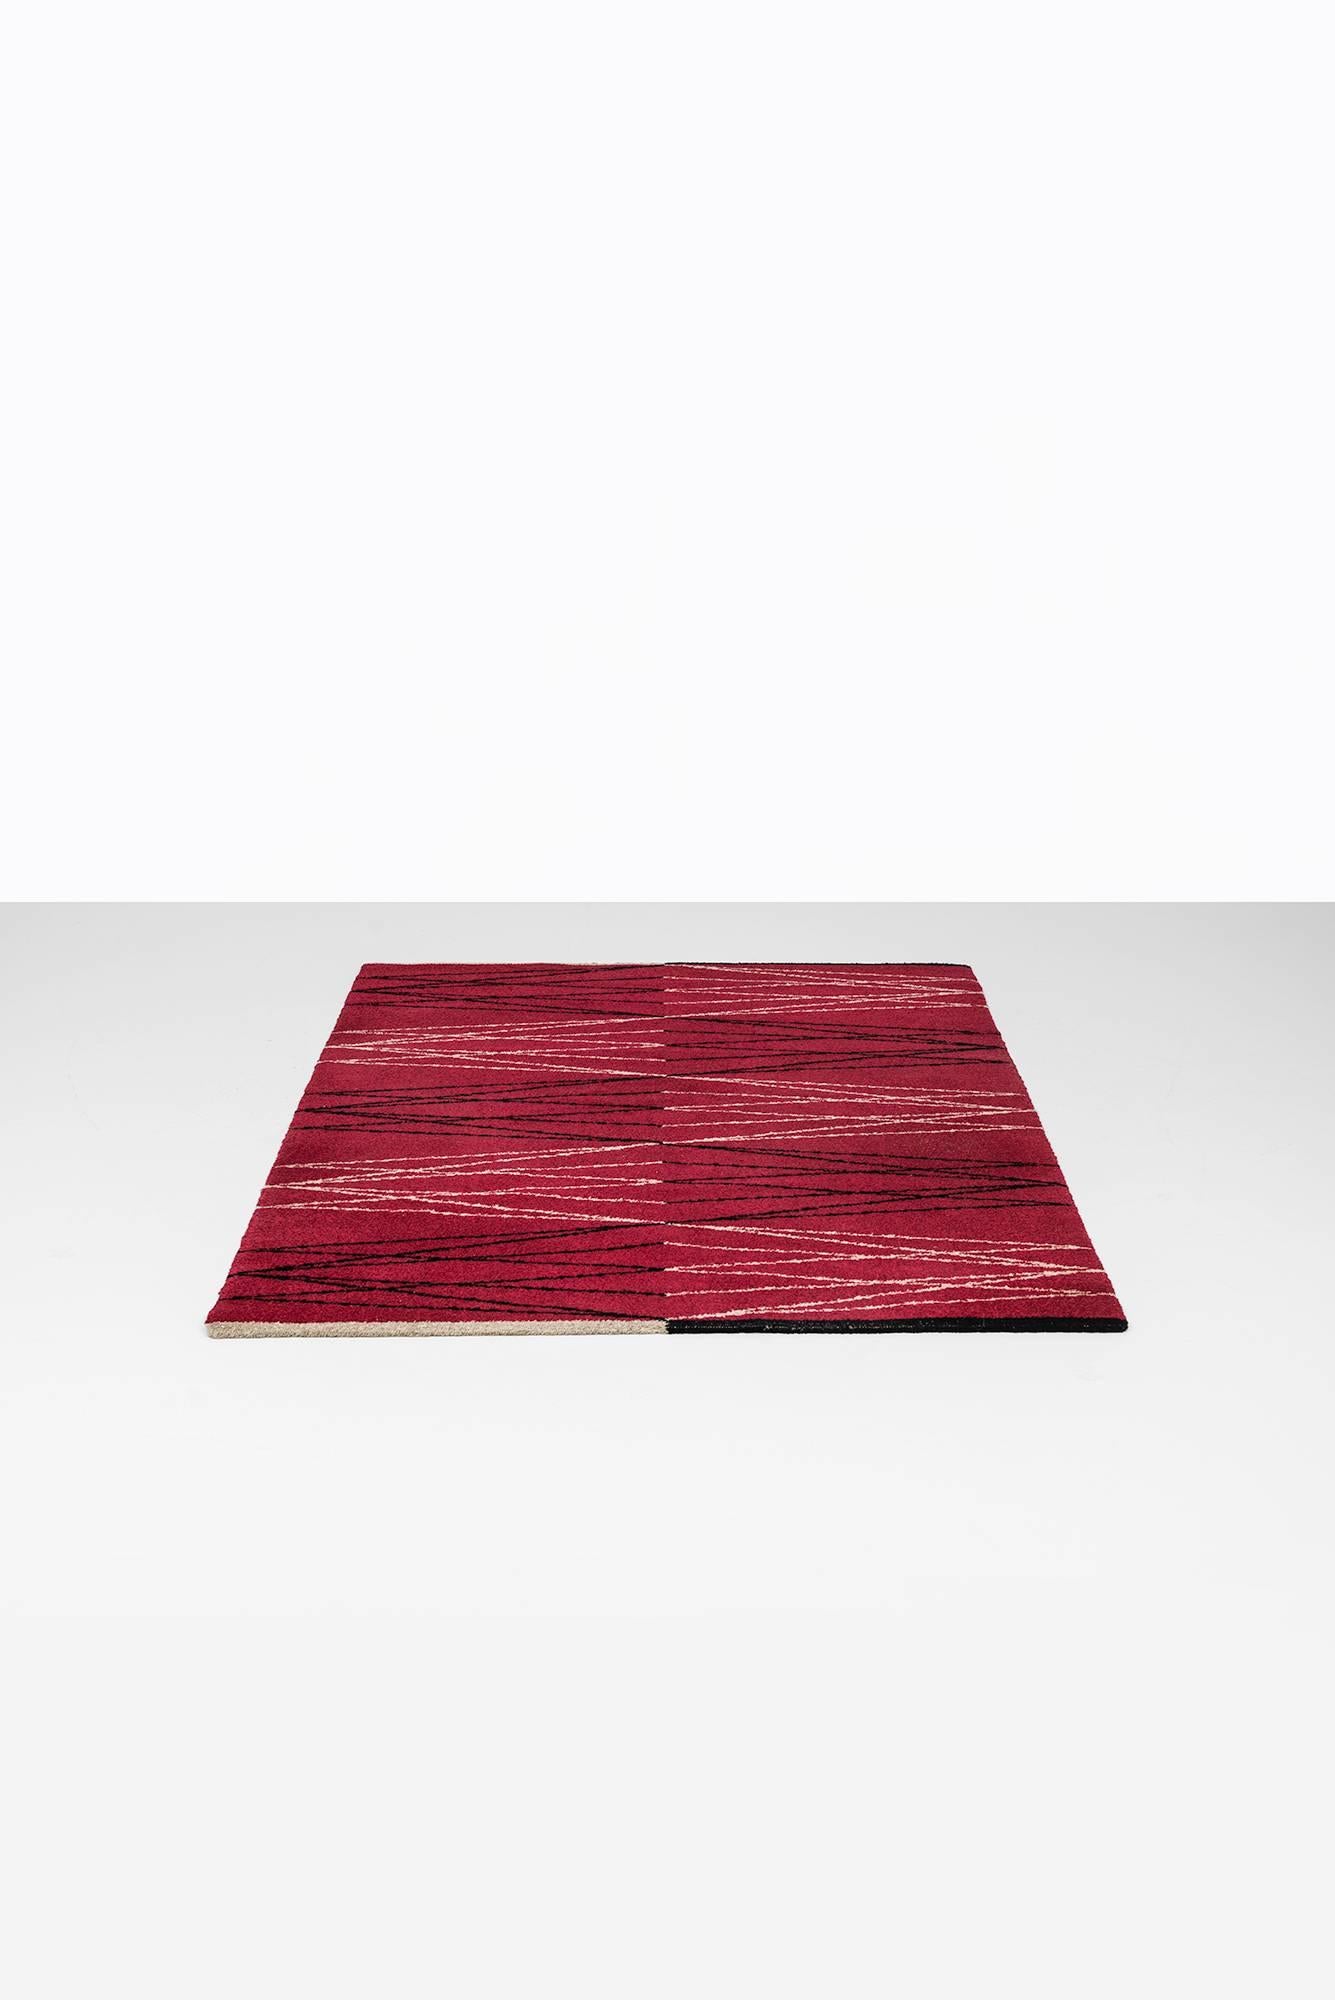 Mid-Century Modern Aina Kånge Carpet Model Bruzaholm by Tabergs Yllefabrik in Sweden